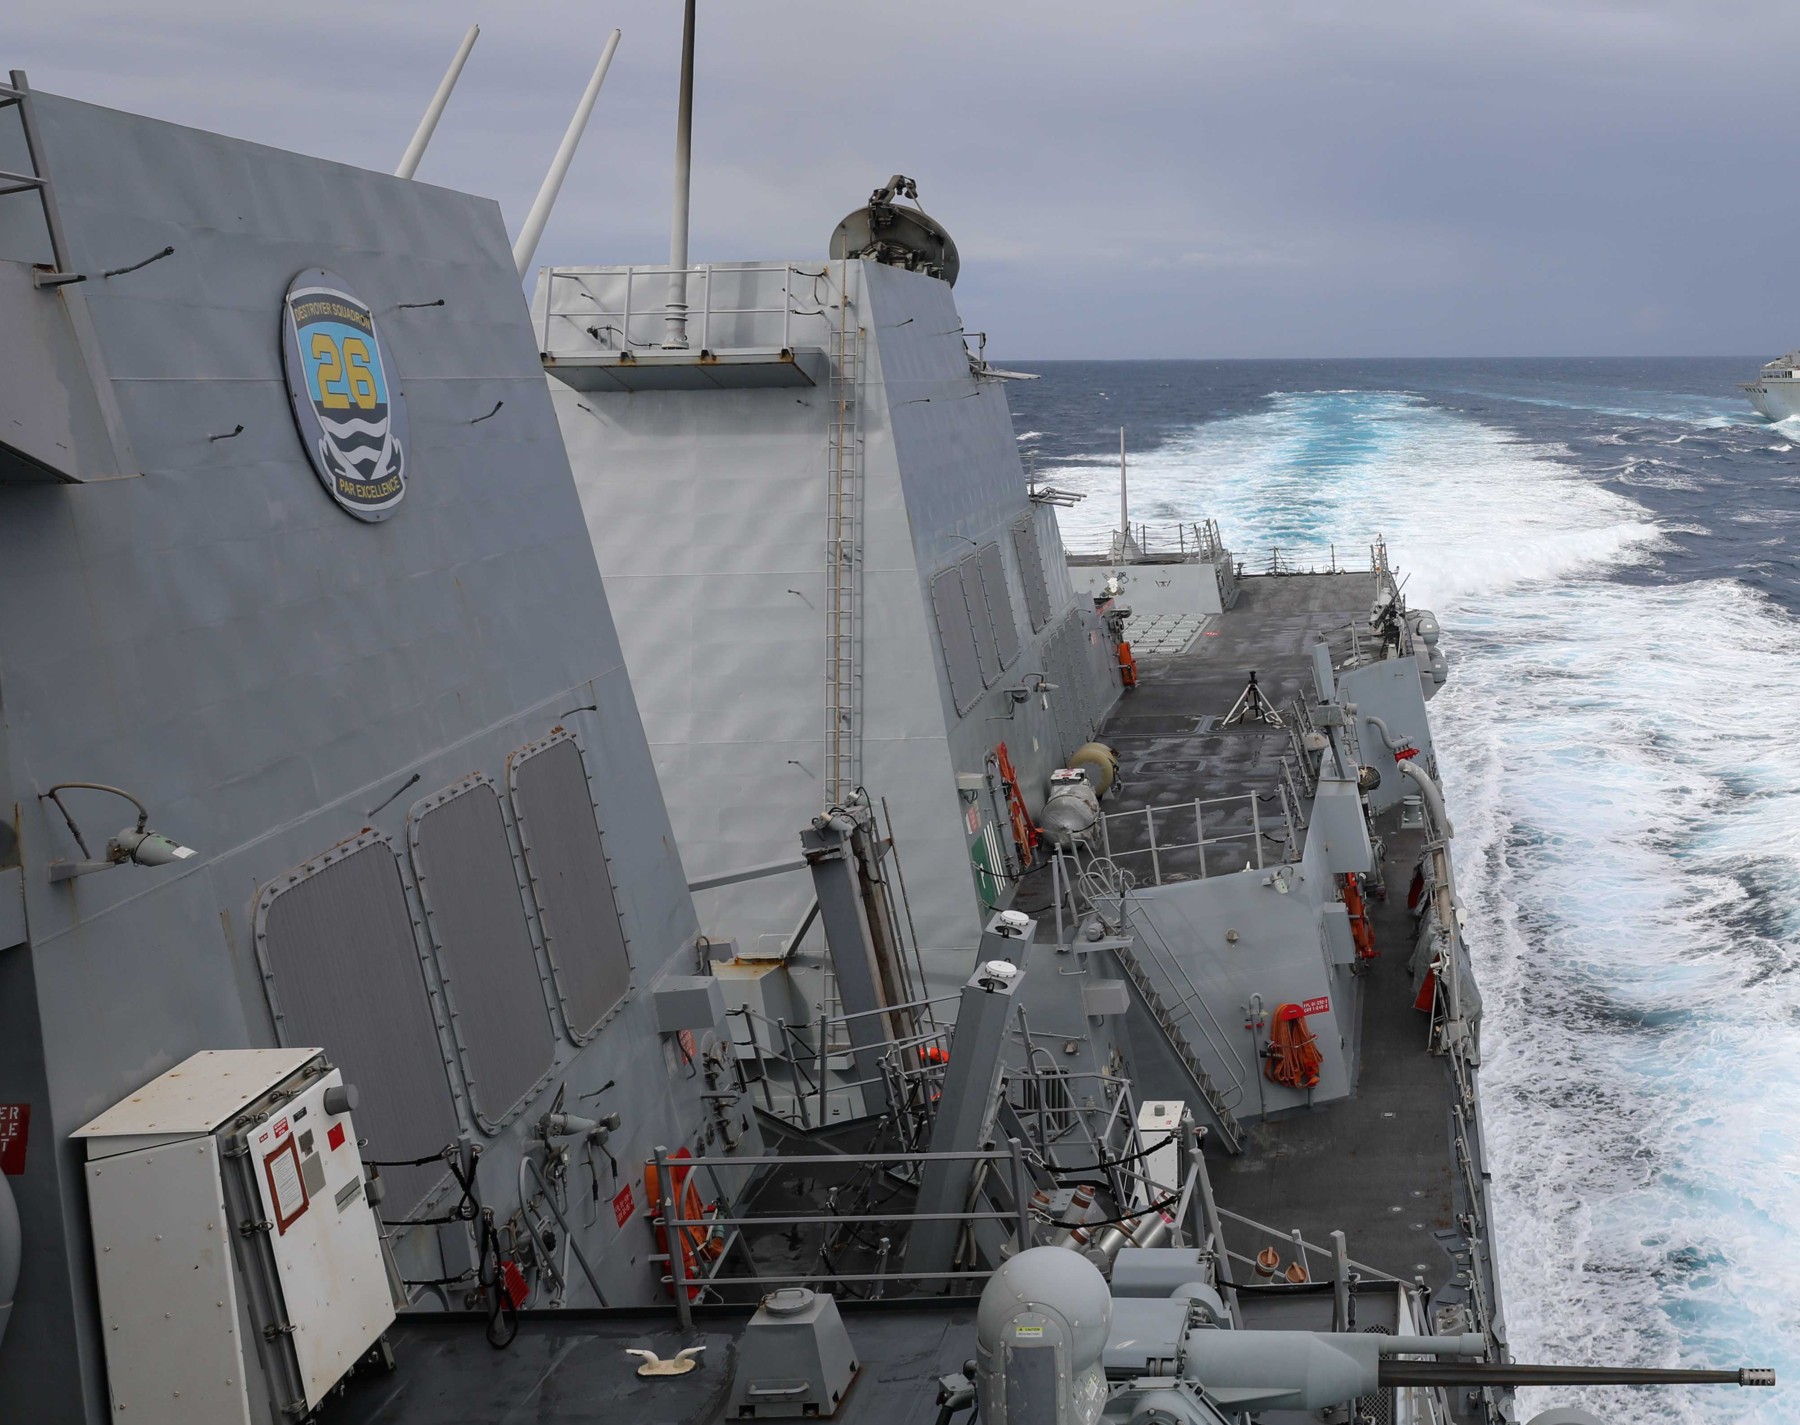 ddg-119 uss delbert d. black arleigh burke class guided missile destroyer aegis us navy adriatic sea 30